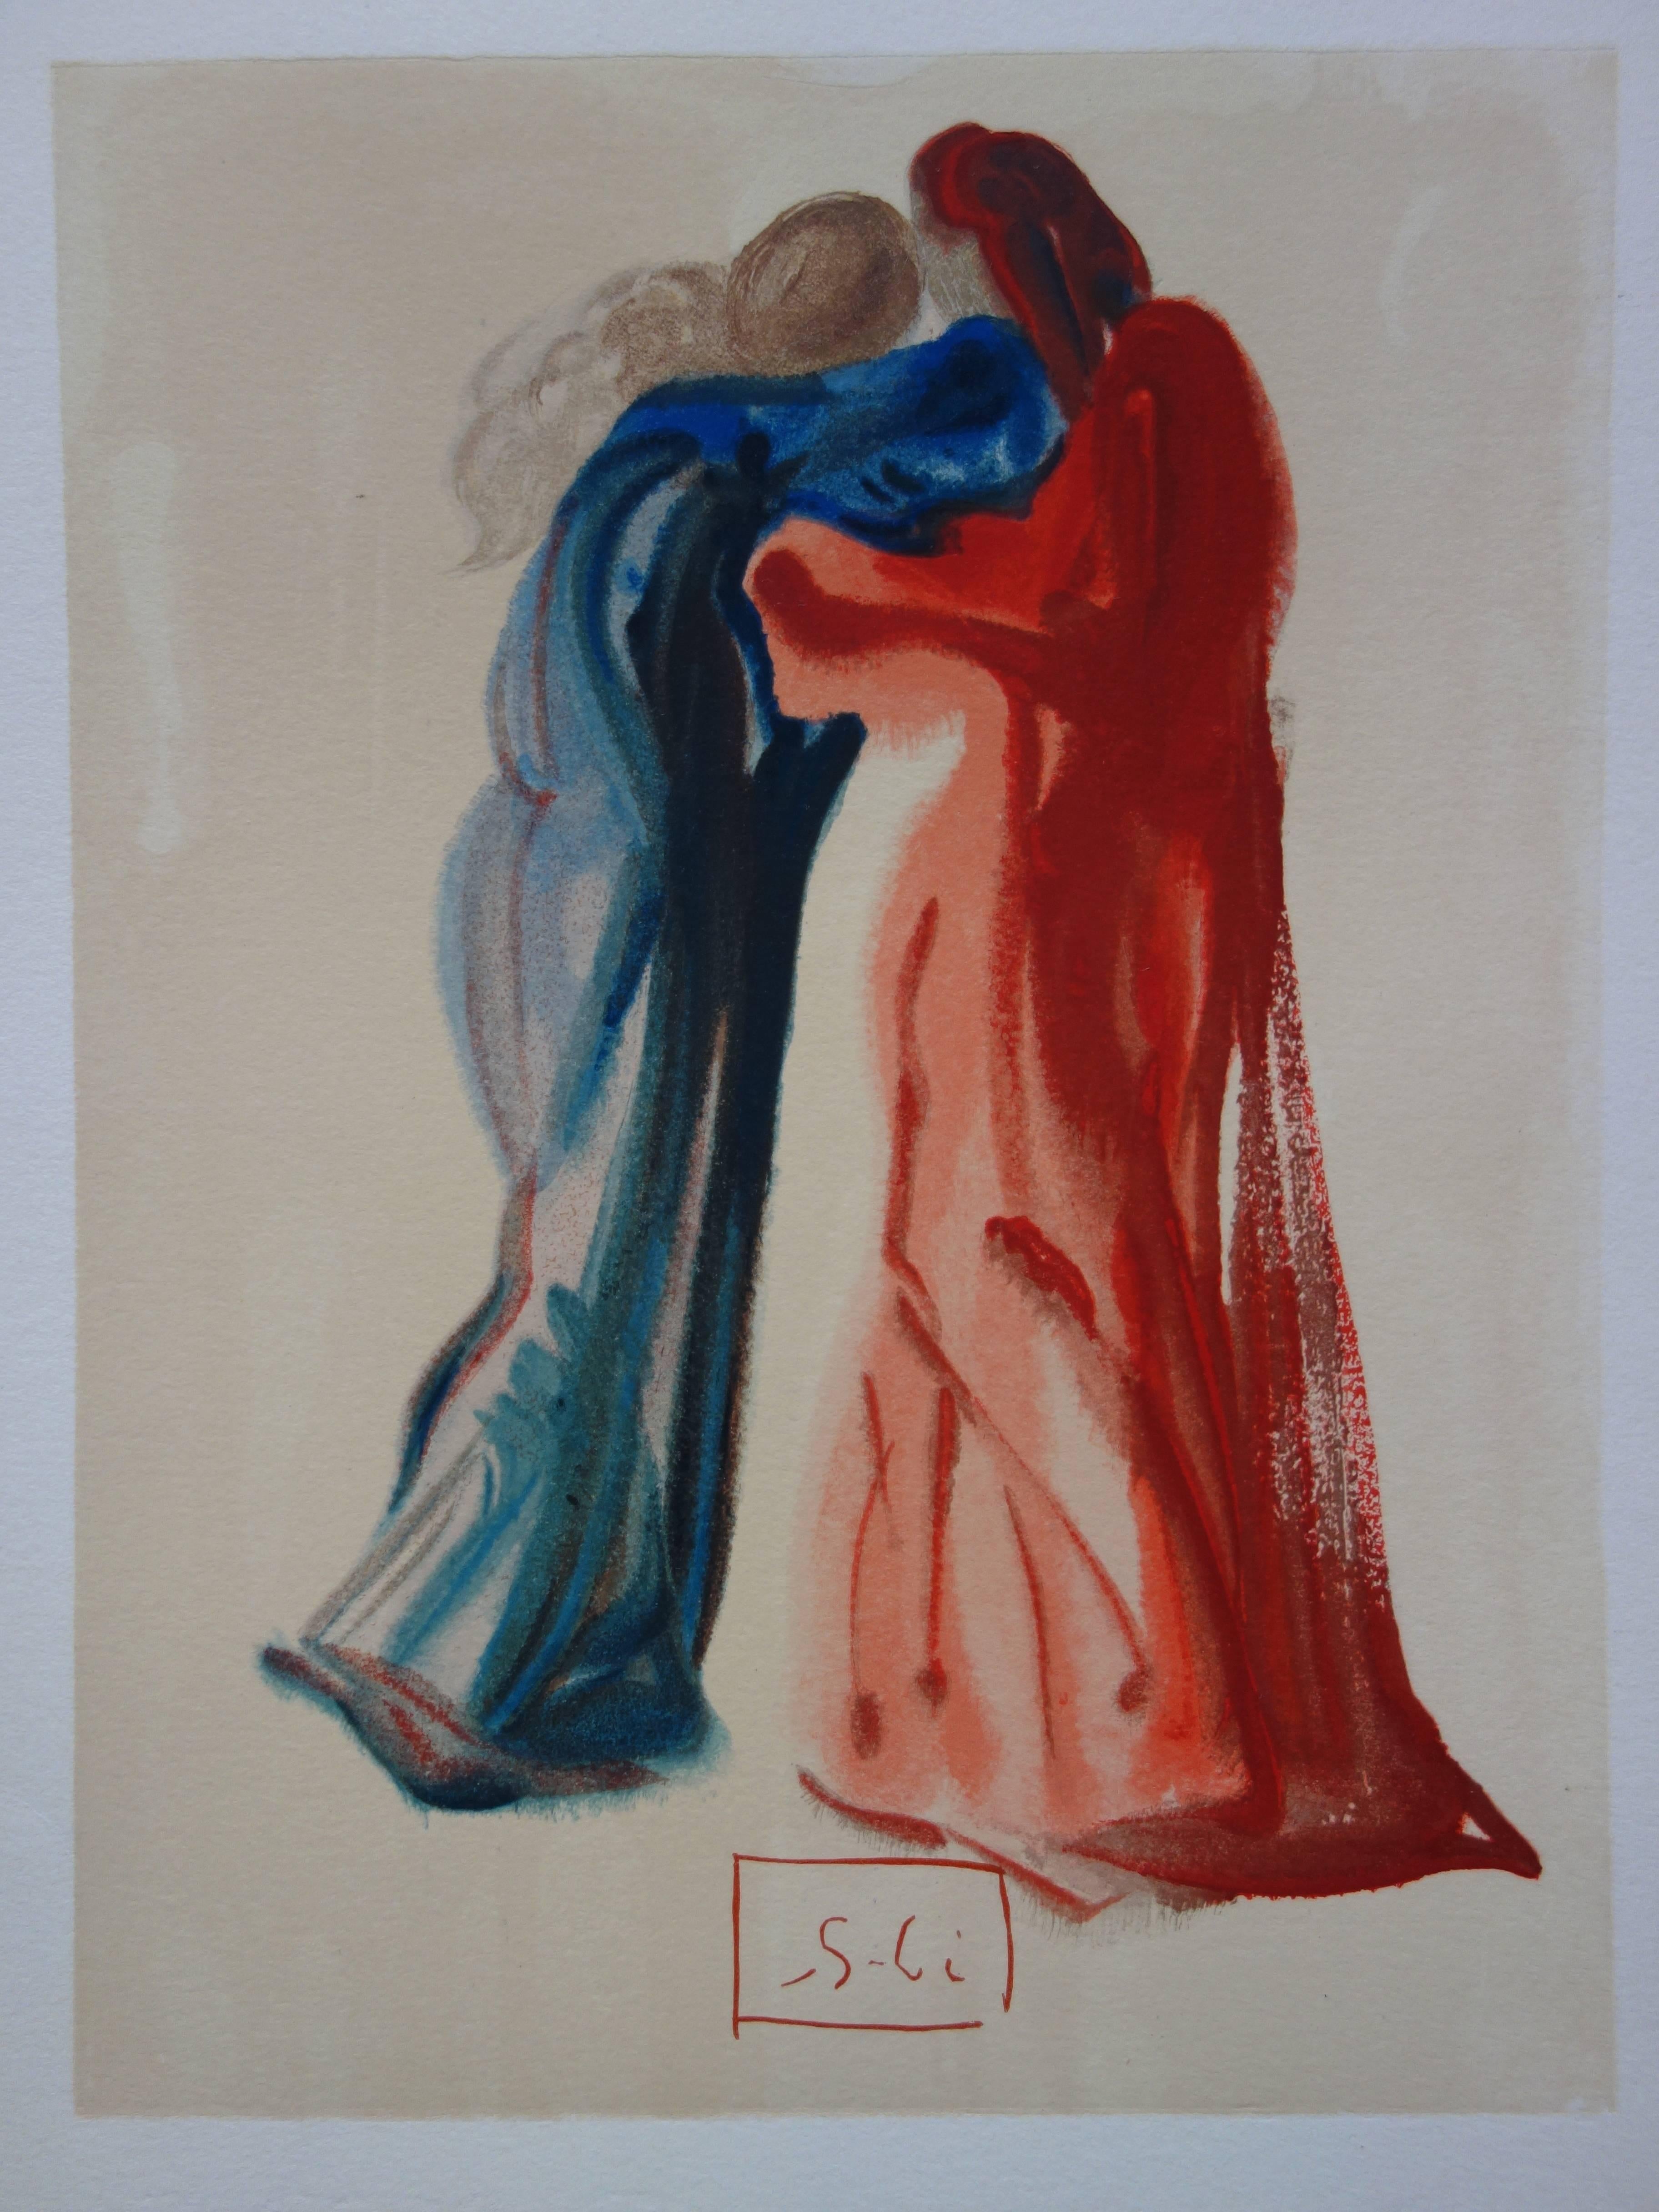 Purgatory 29 - Meeting of Dante and Beatrice - Original woodcut - 1963 - Surrealist Print by Salvador Dalí